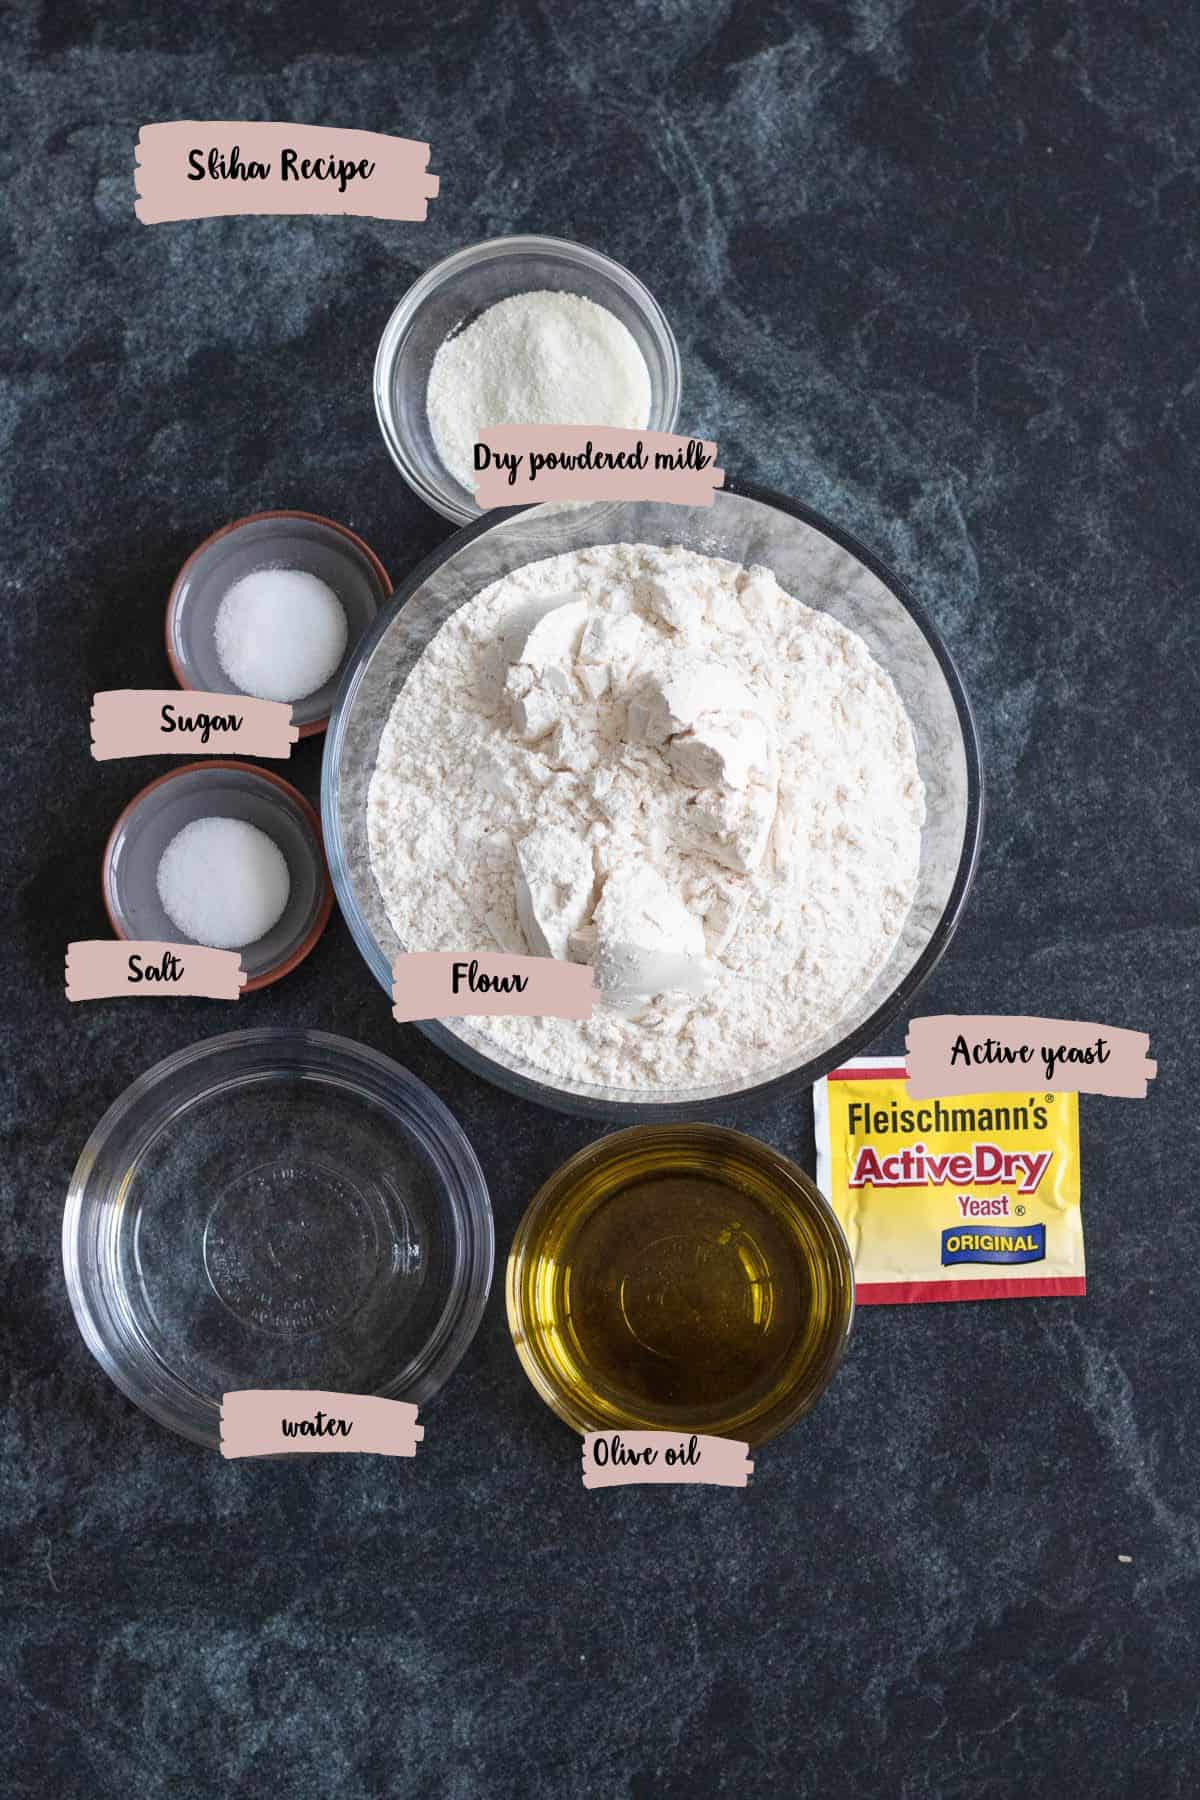 Ingredients shown needed to prepare sfiha recipe. 